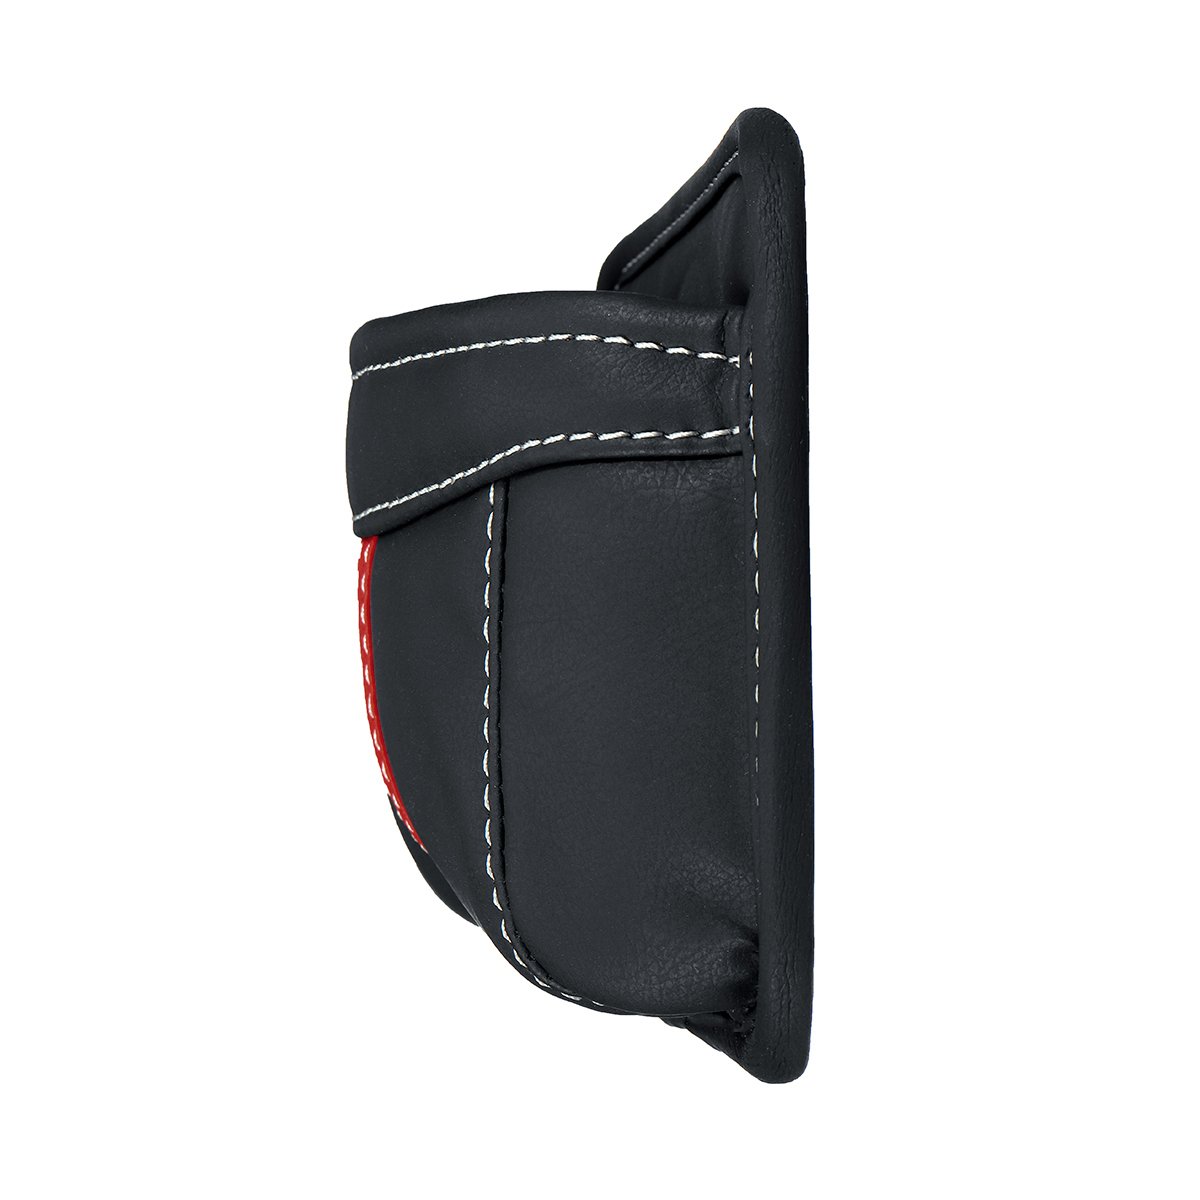 Car-Storage-Bag-Organizer-Phone-Wallet-Pocket-Pouch-Hanging-Holder-PU-leather-1632847-8